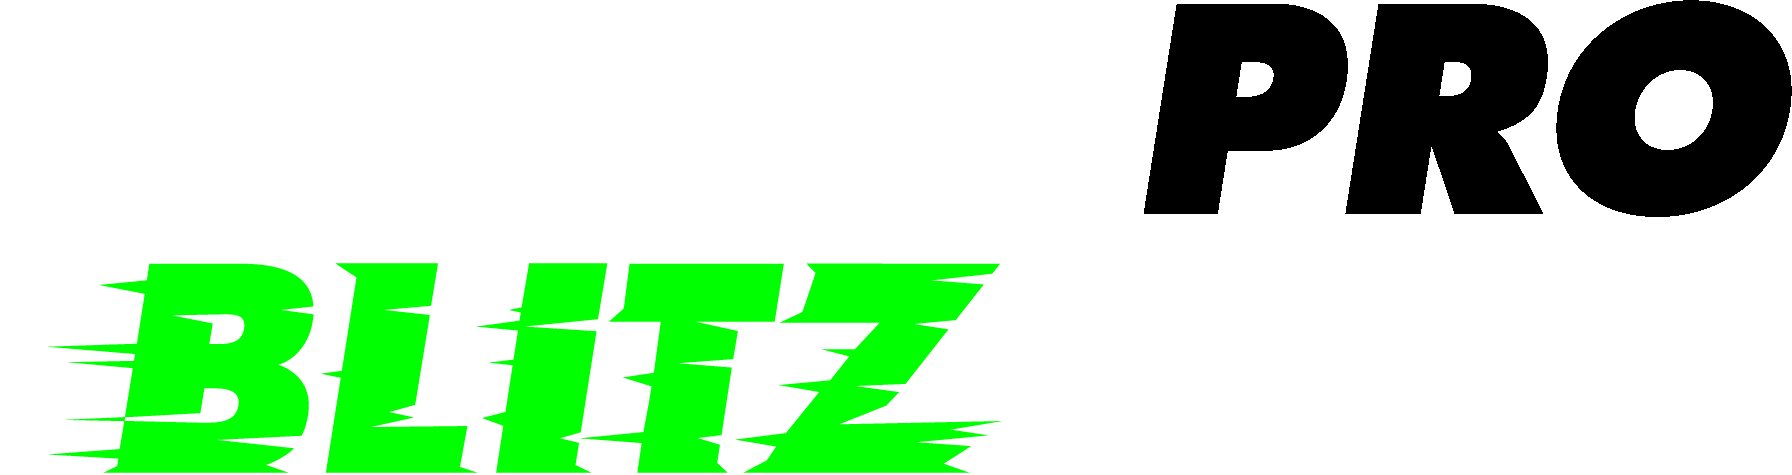 Savage Race Logo - Savage Race Dallas 2018 - Register Now